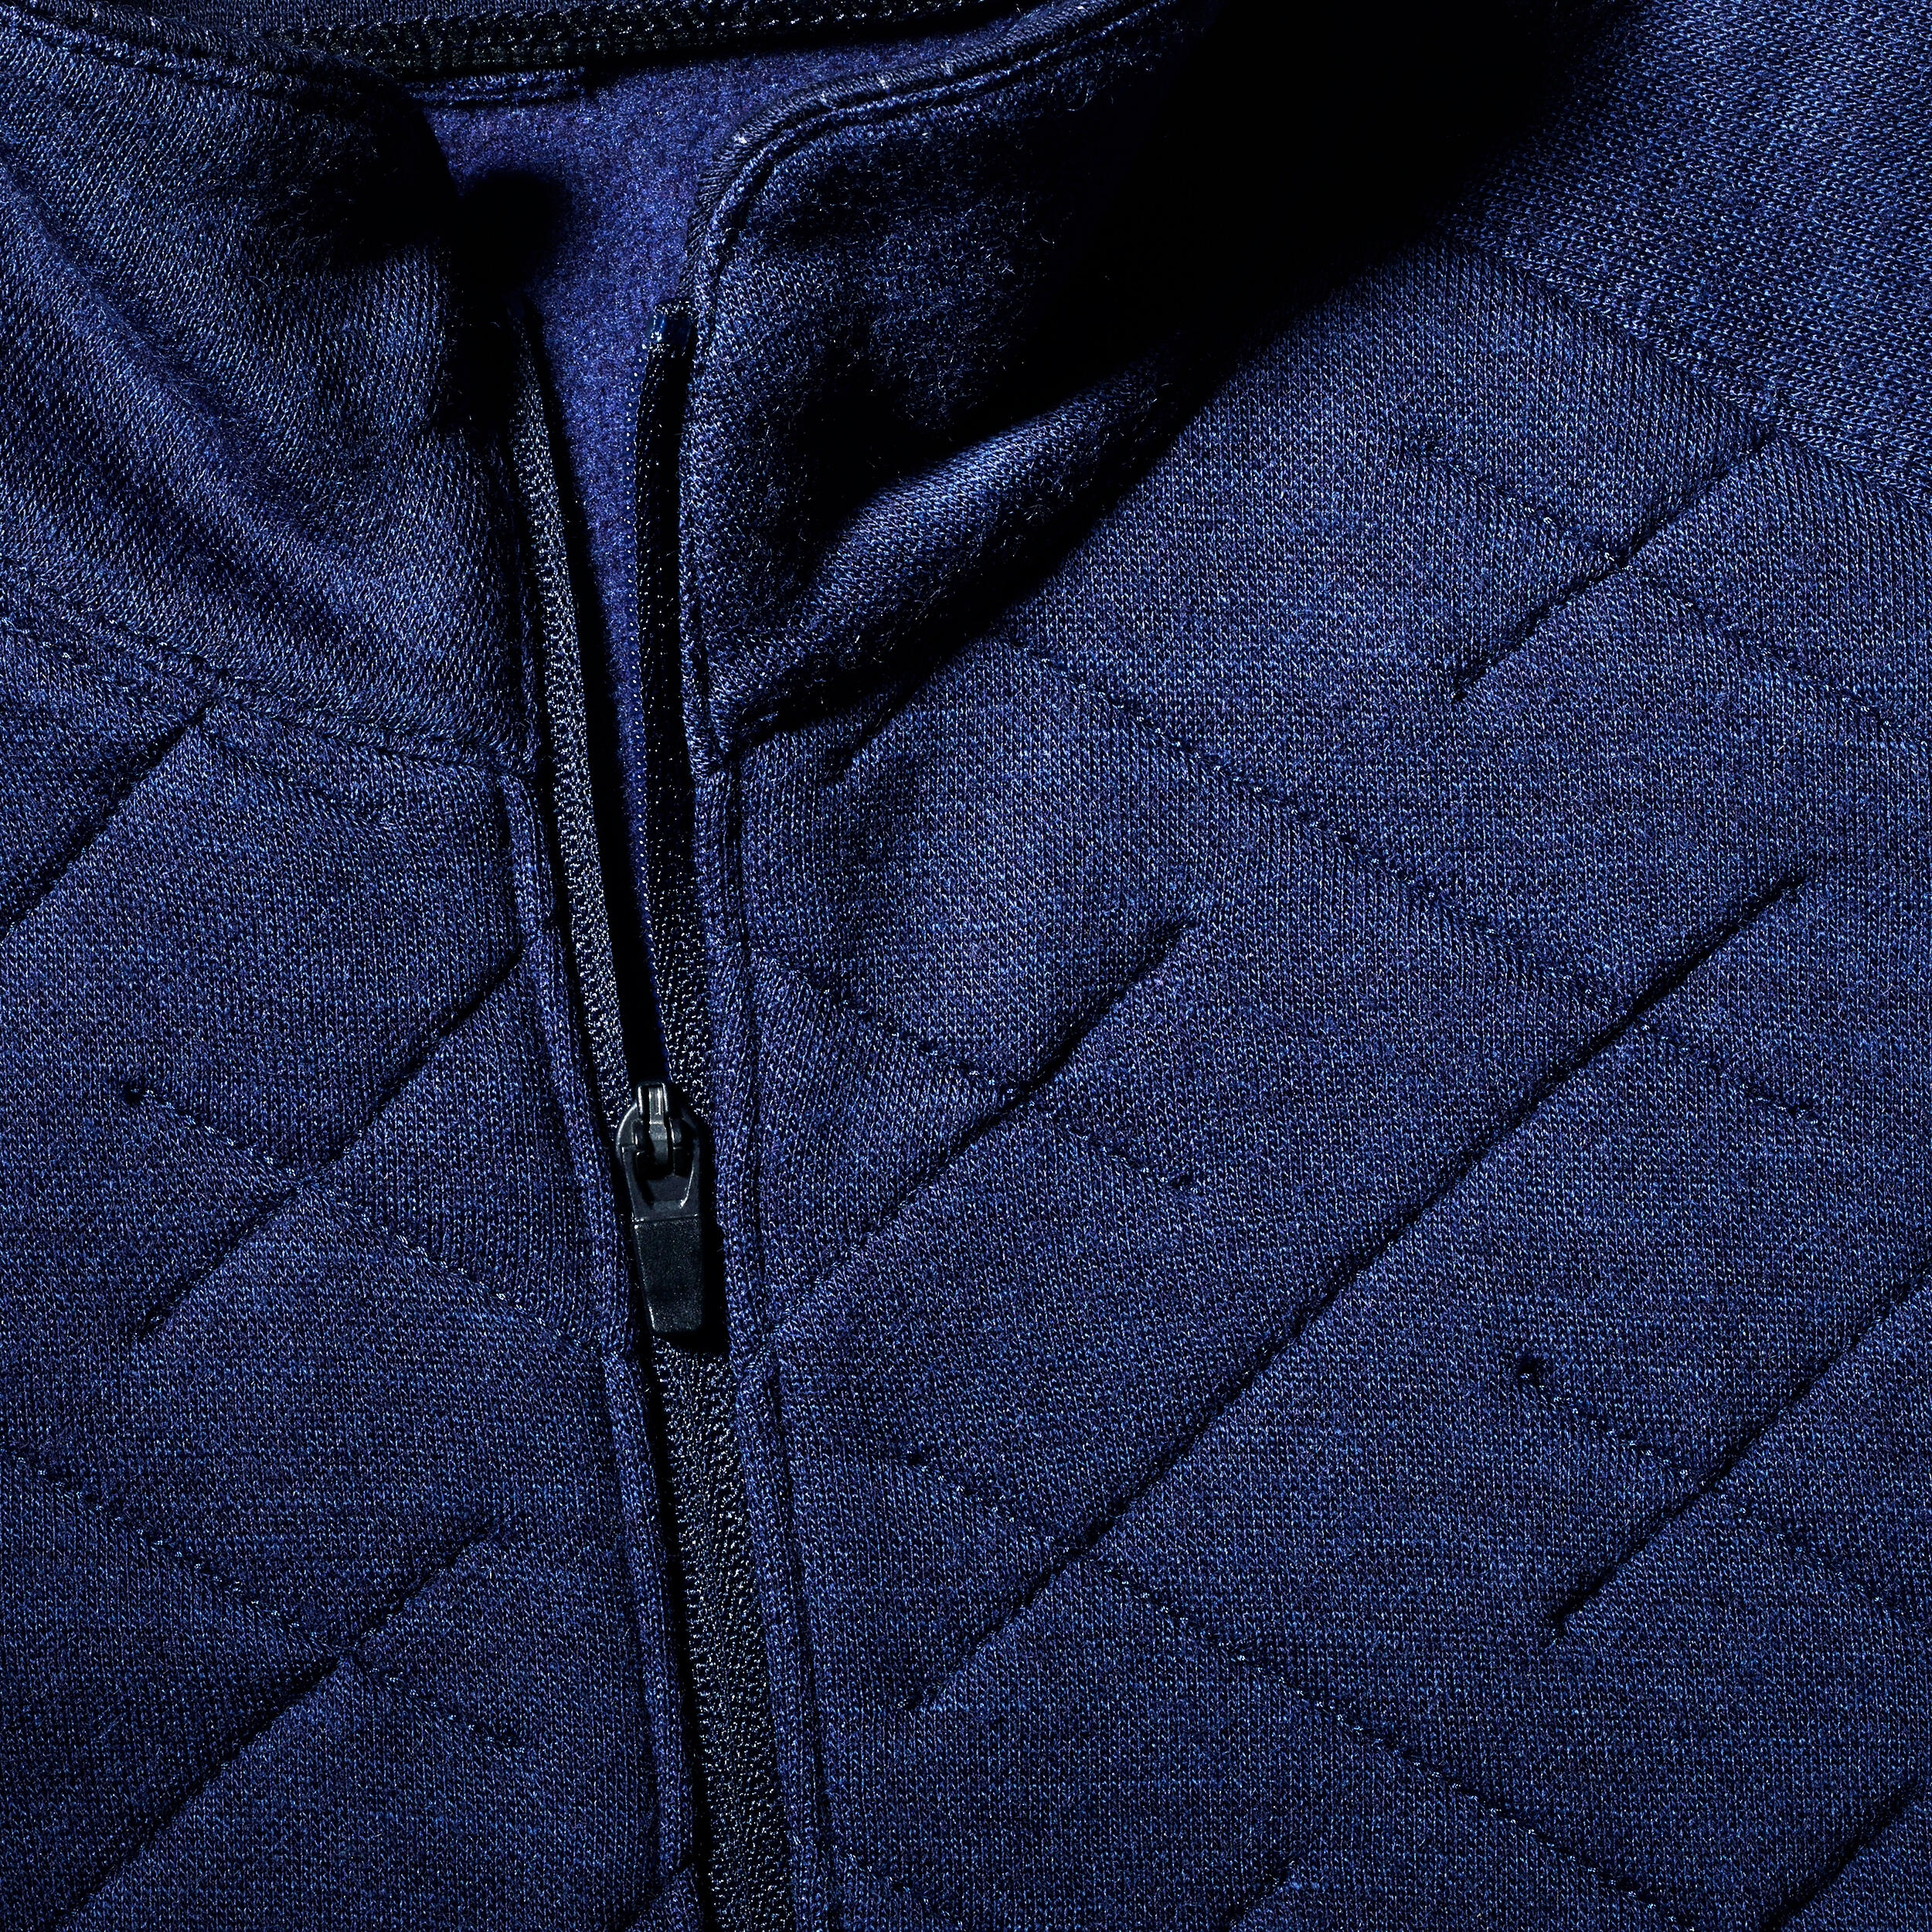 Chandail en laine mérinos femme – Trek 900 bleu - FORCLAZ